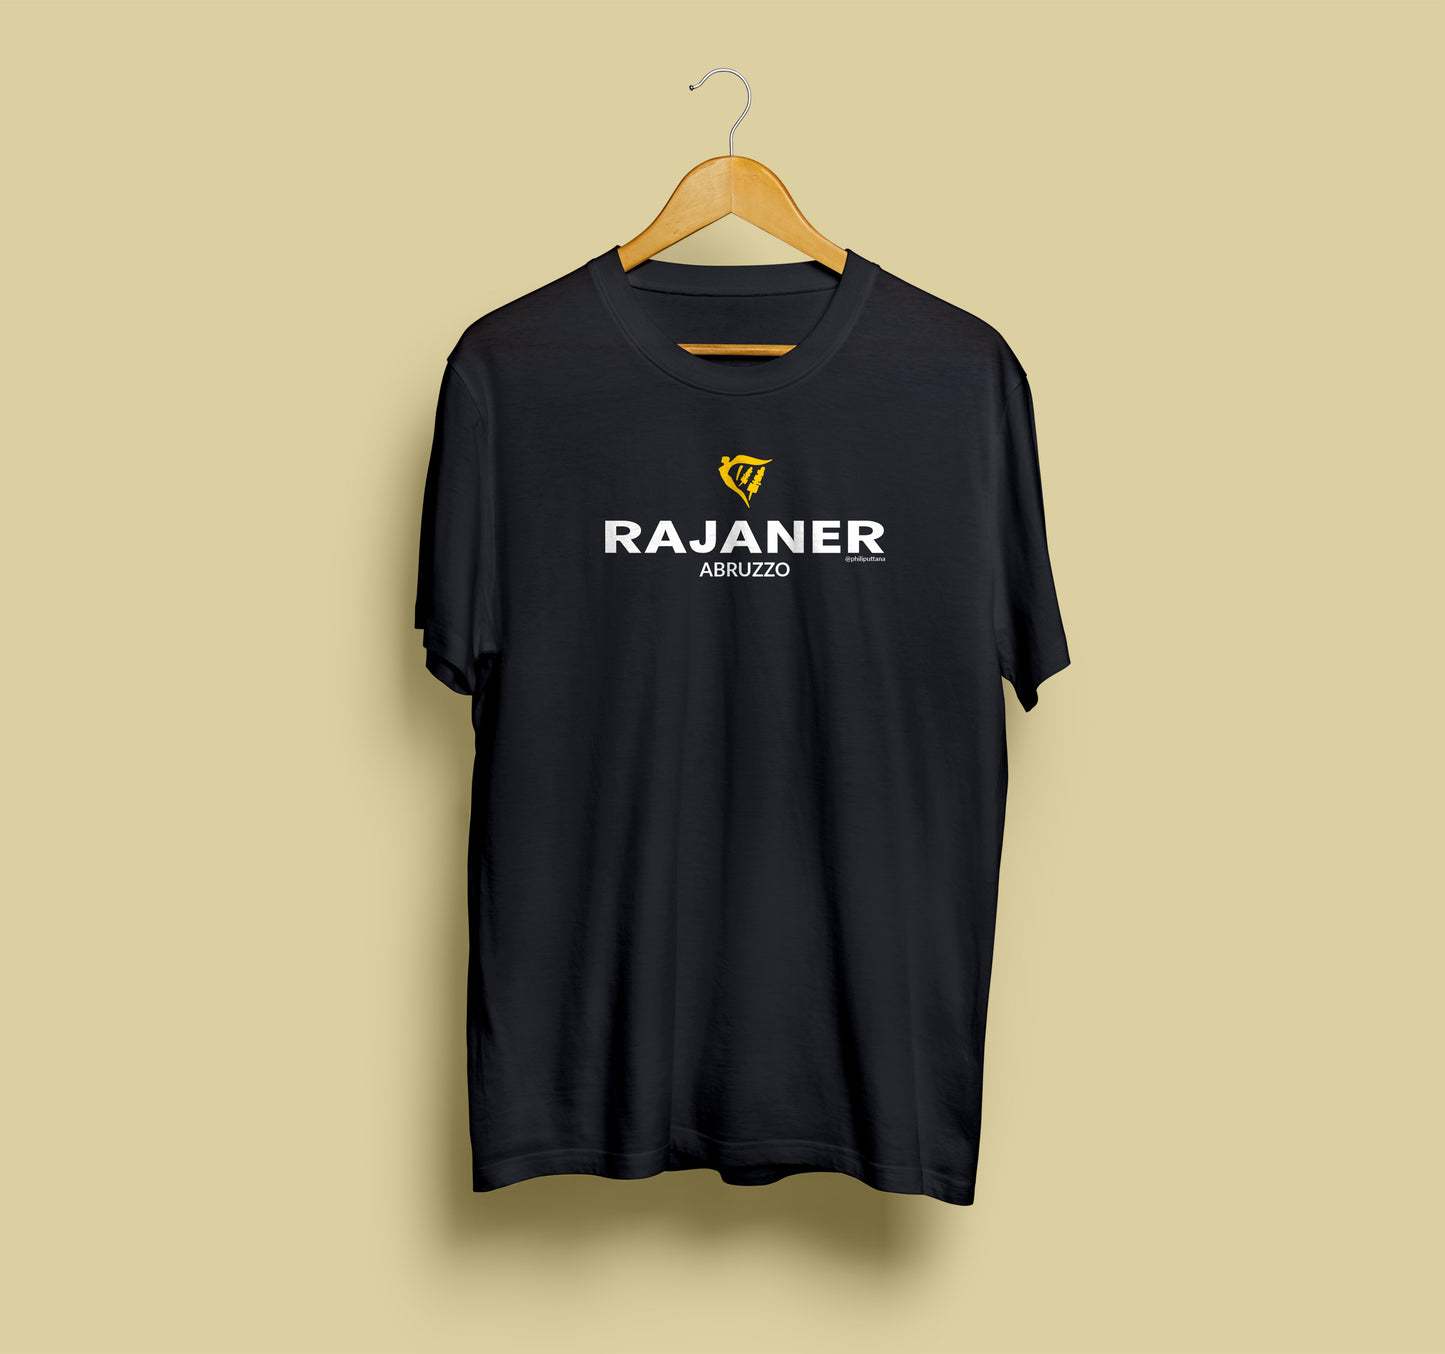 Rajaner - T-Shirt